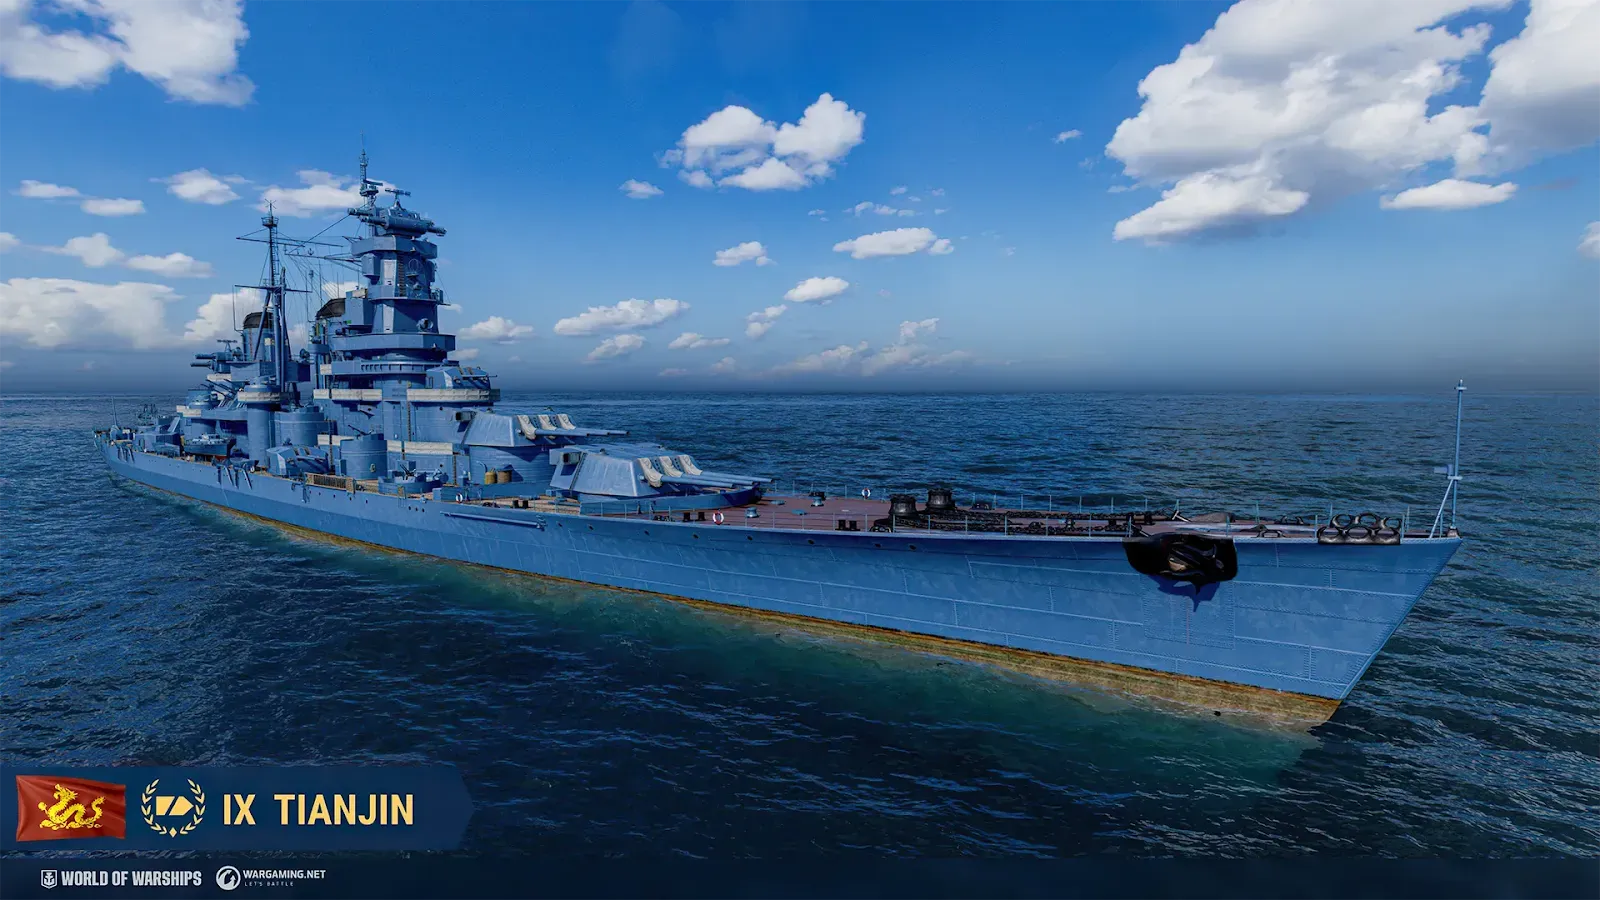 Image of pan-asian cruiser Tianjin